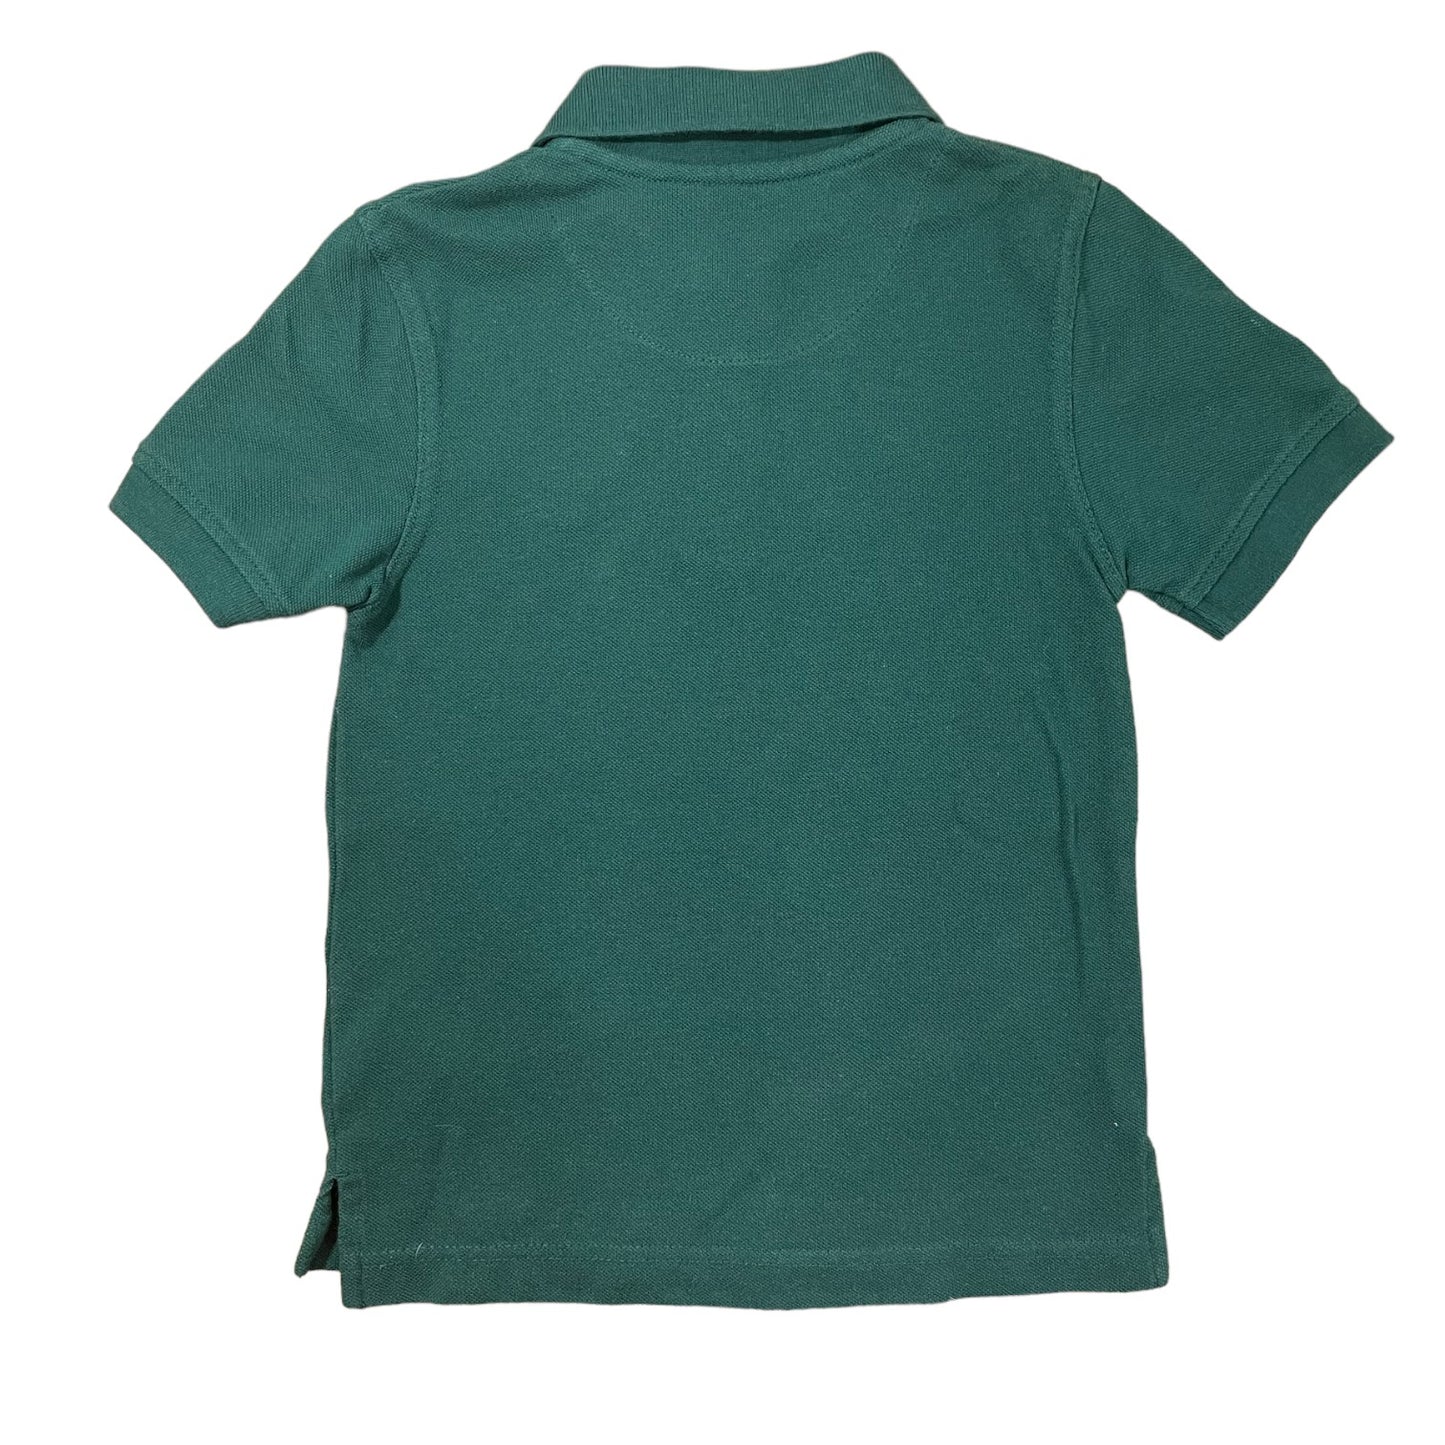 Chaps Boys Uniform Shirt Green Size 7